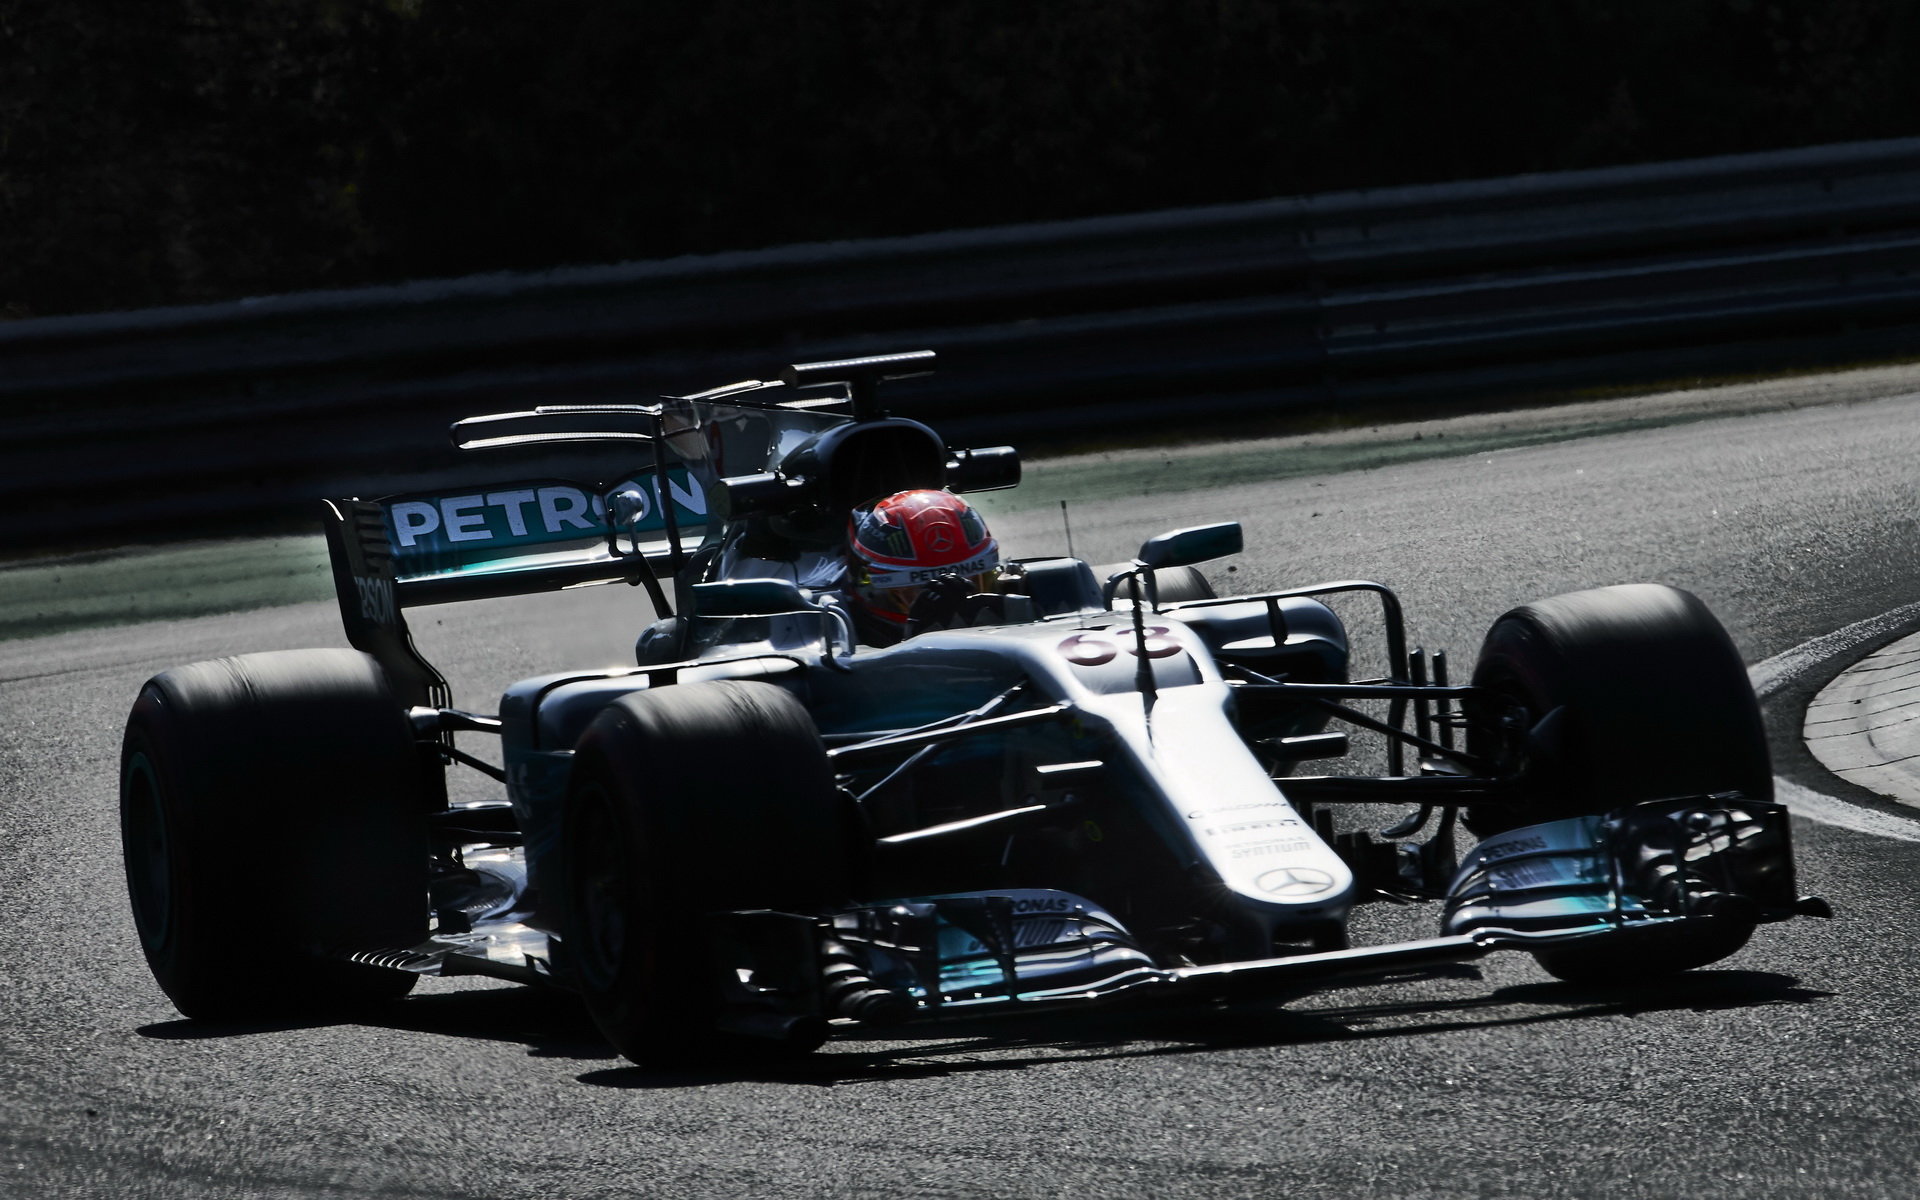 George Russell testuje druhý den vůz Mercedes F1 W08 EQ Power+ v Maďarsku